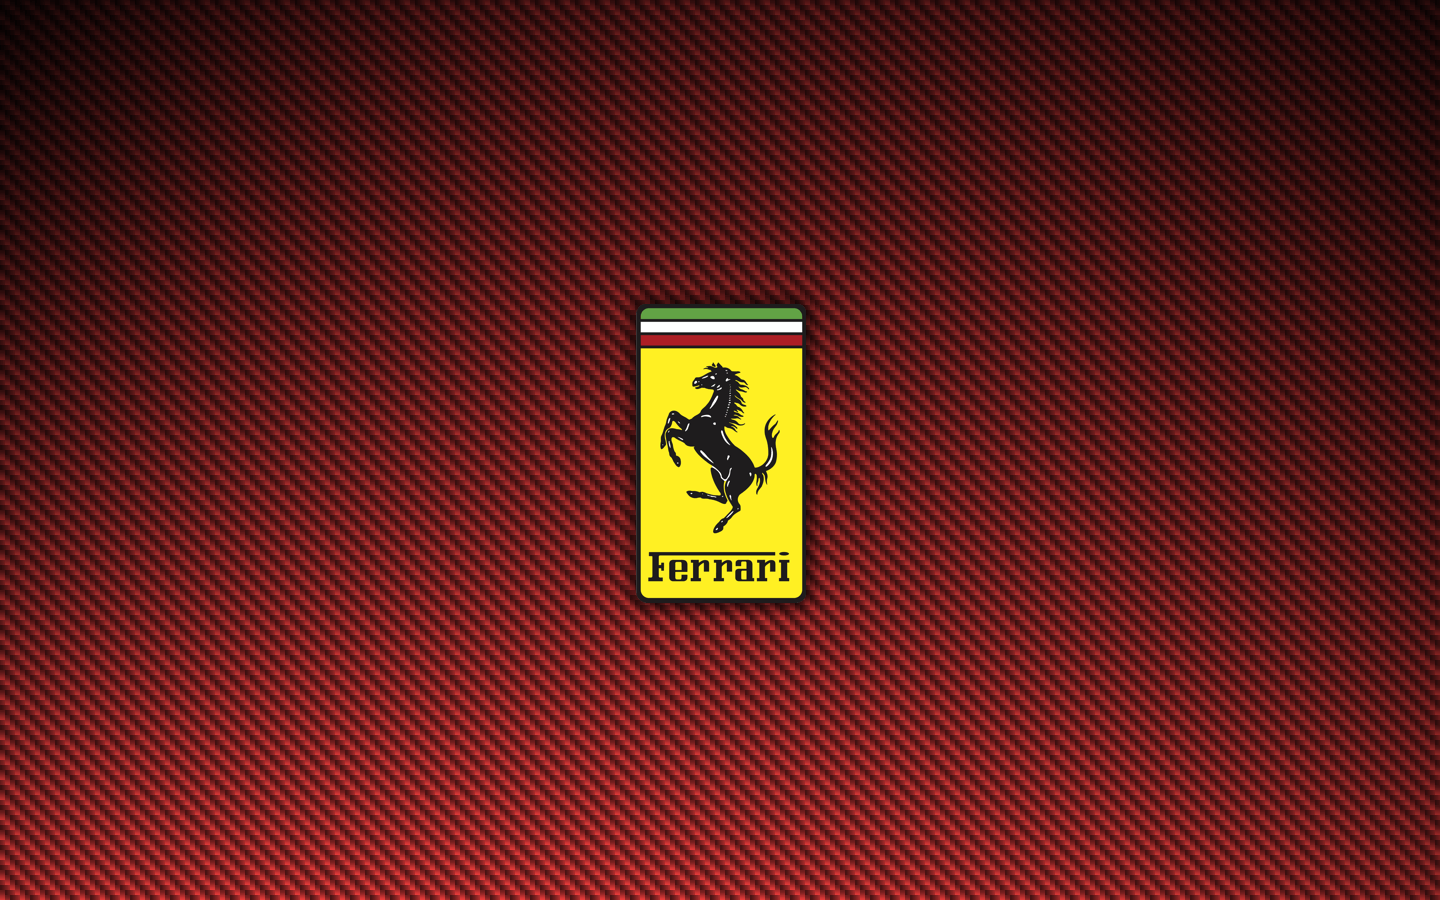 Ferrari Logo Red Carbon Fiber Wallpaper 1440×900. darelparker